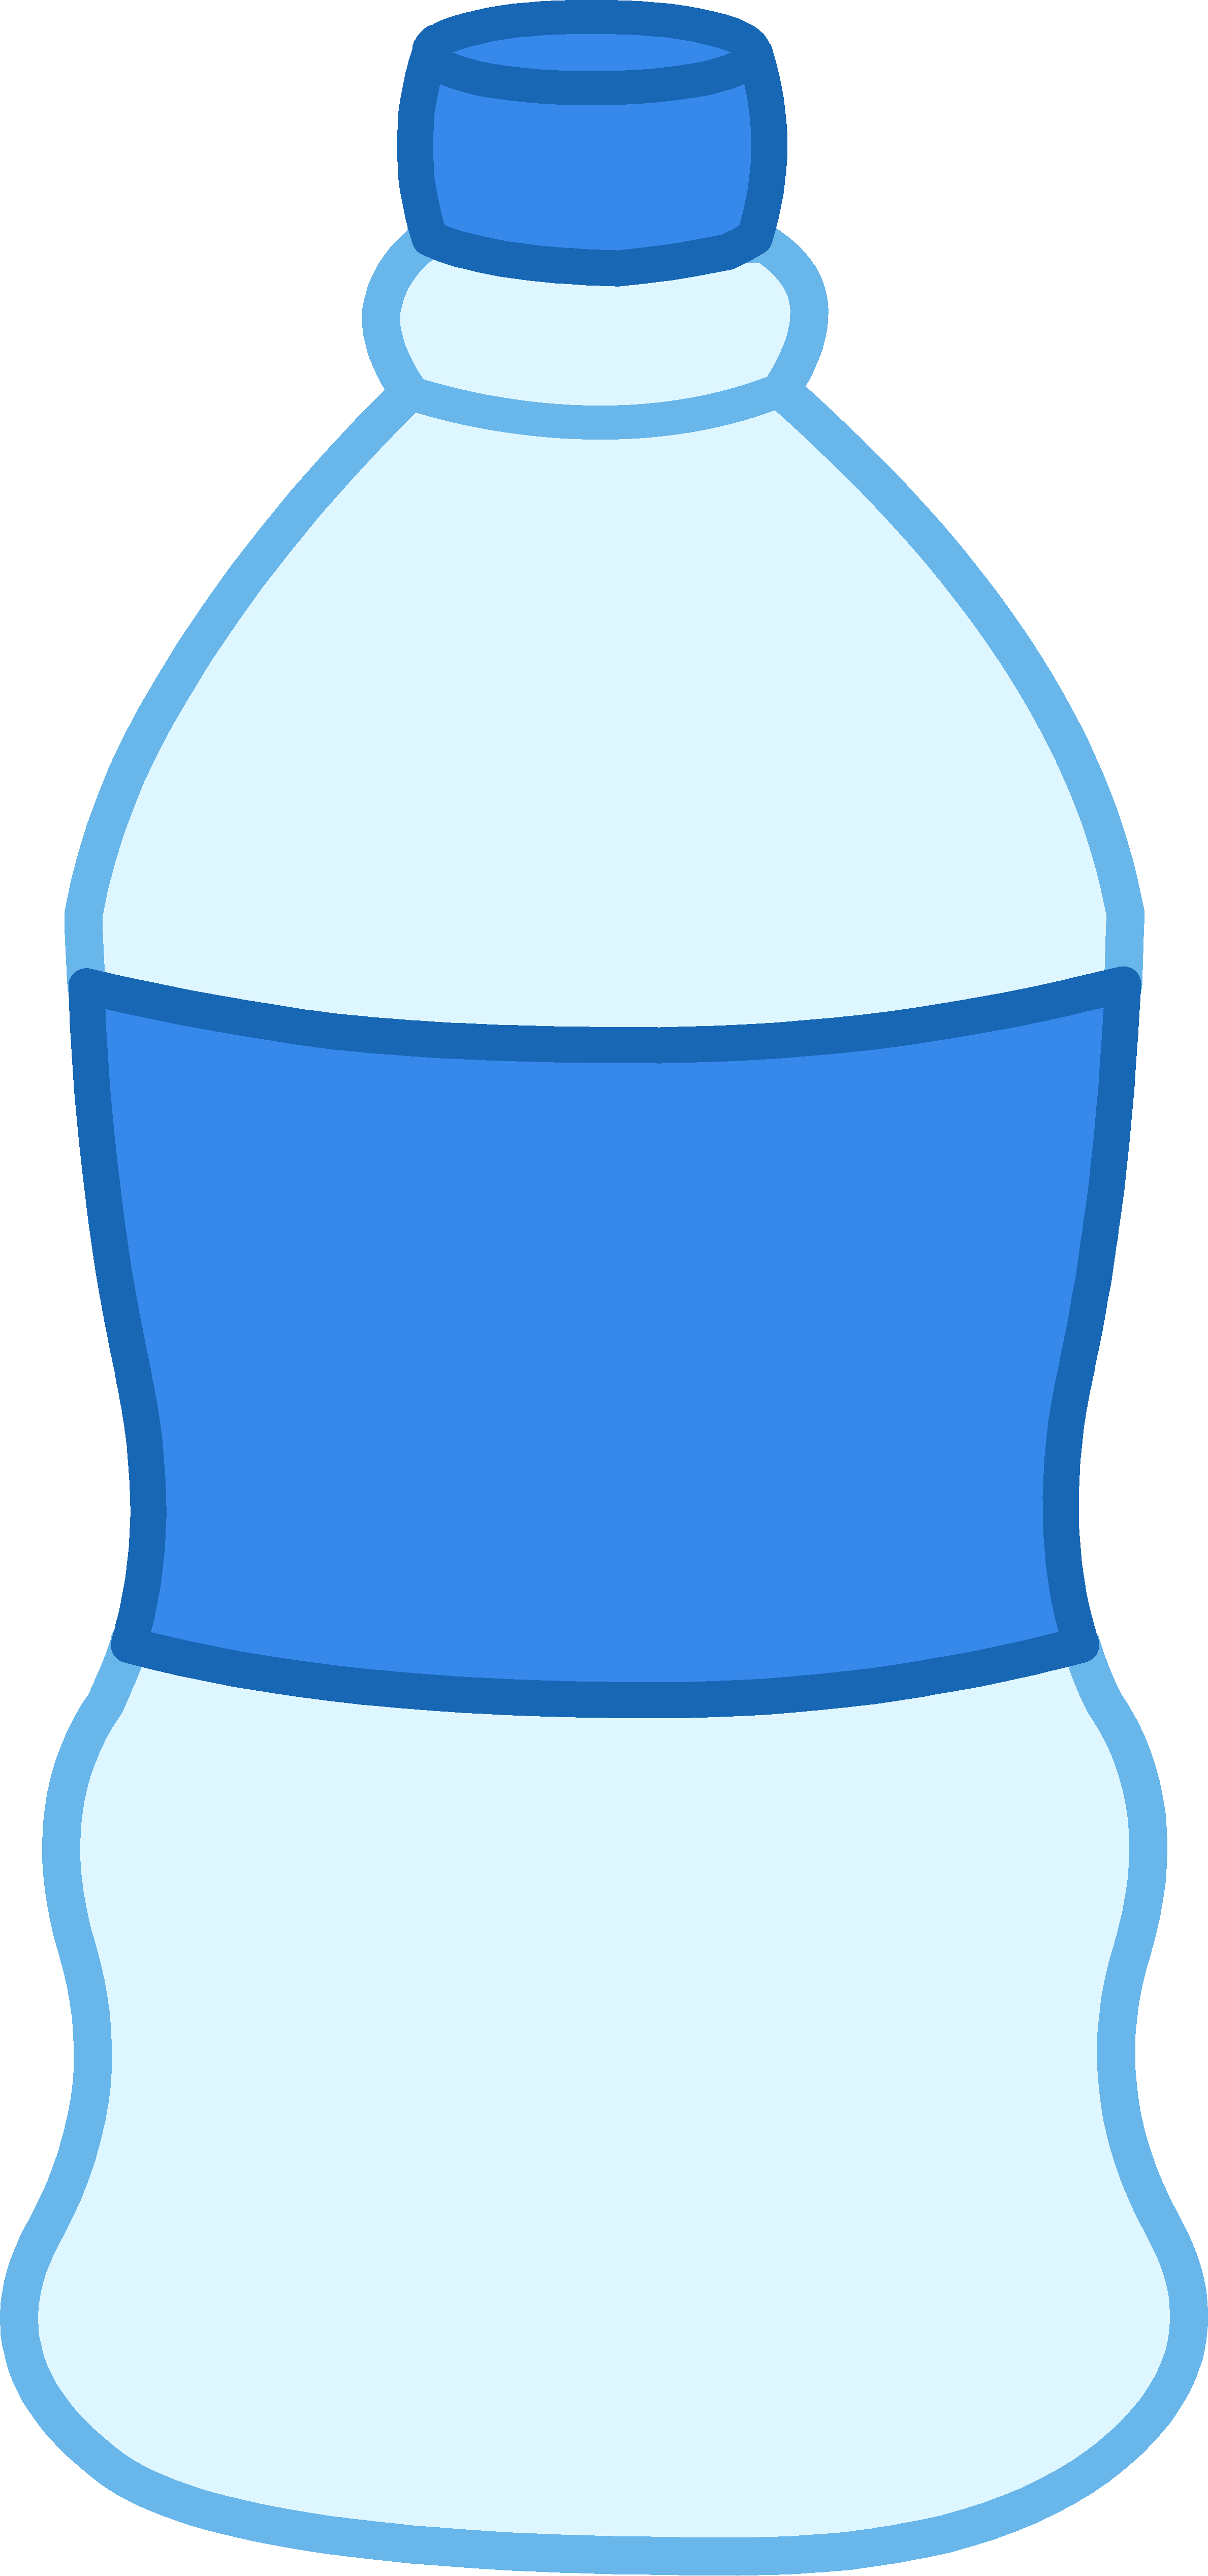 Clip art free download. Water bottle cartoon png